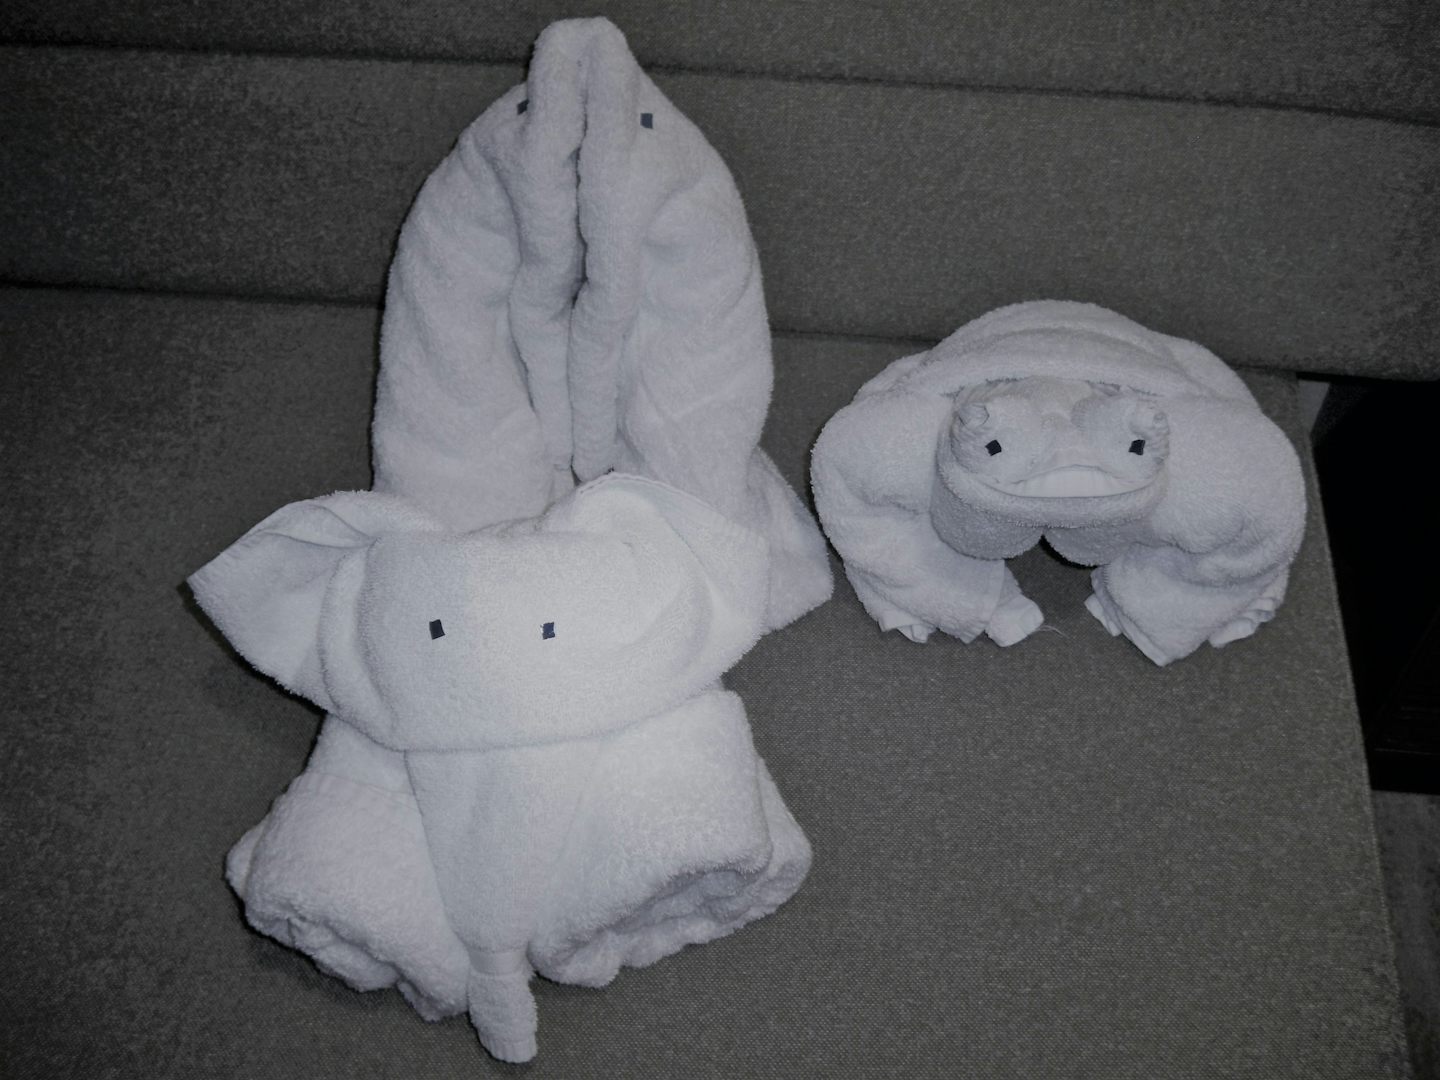 Towel animals made.